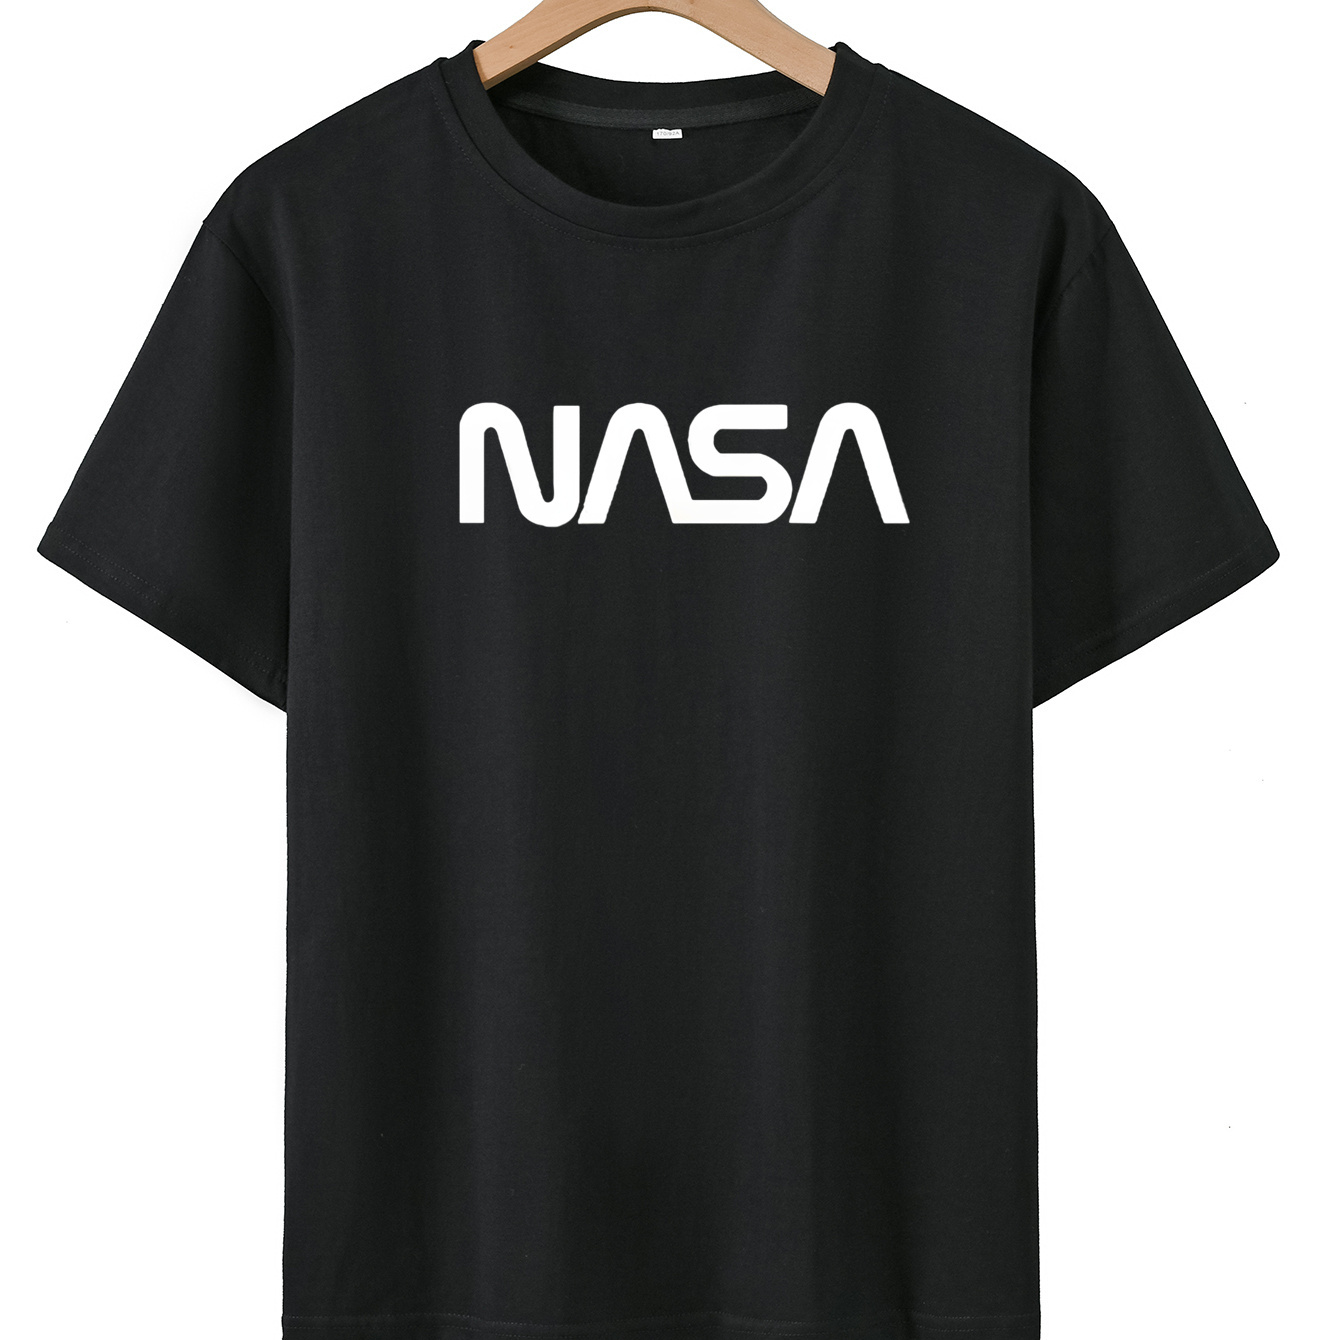 

Nasa Print Boy's Creative T-shirt, Casual Comfy Crew Neck Tee Top For Summer